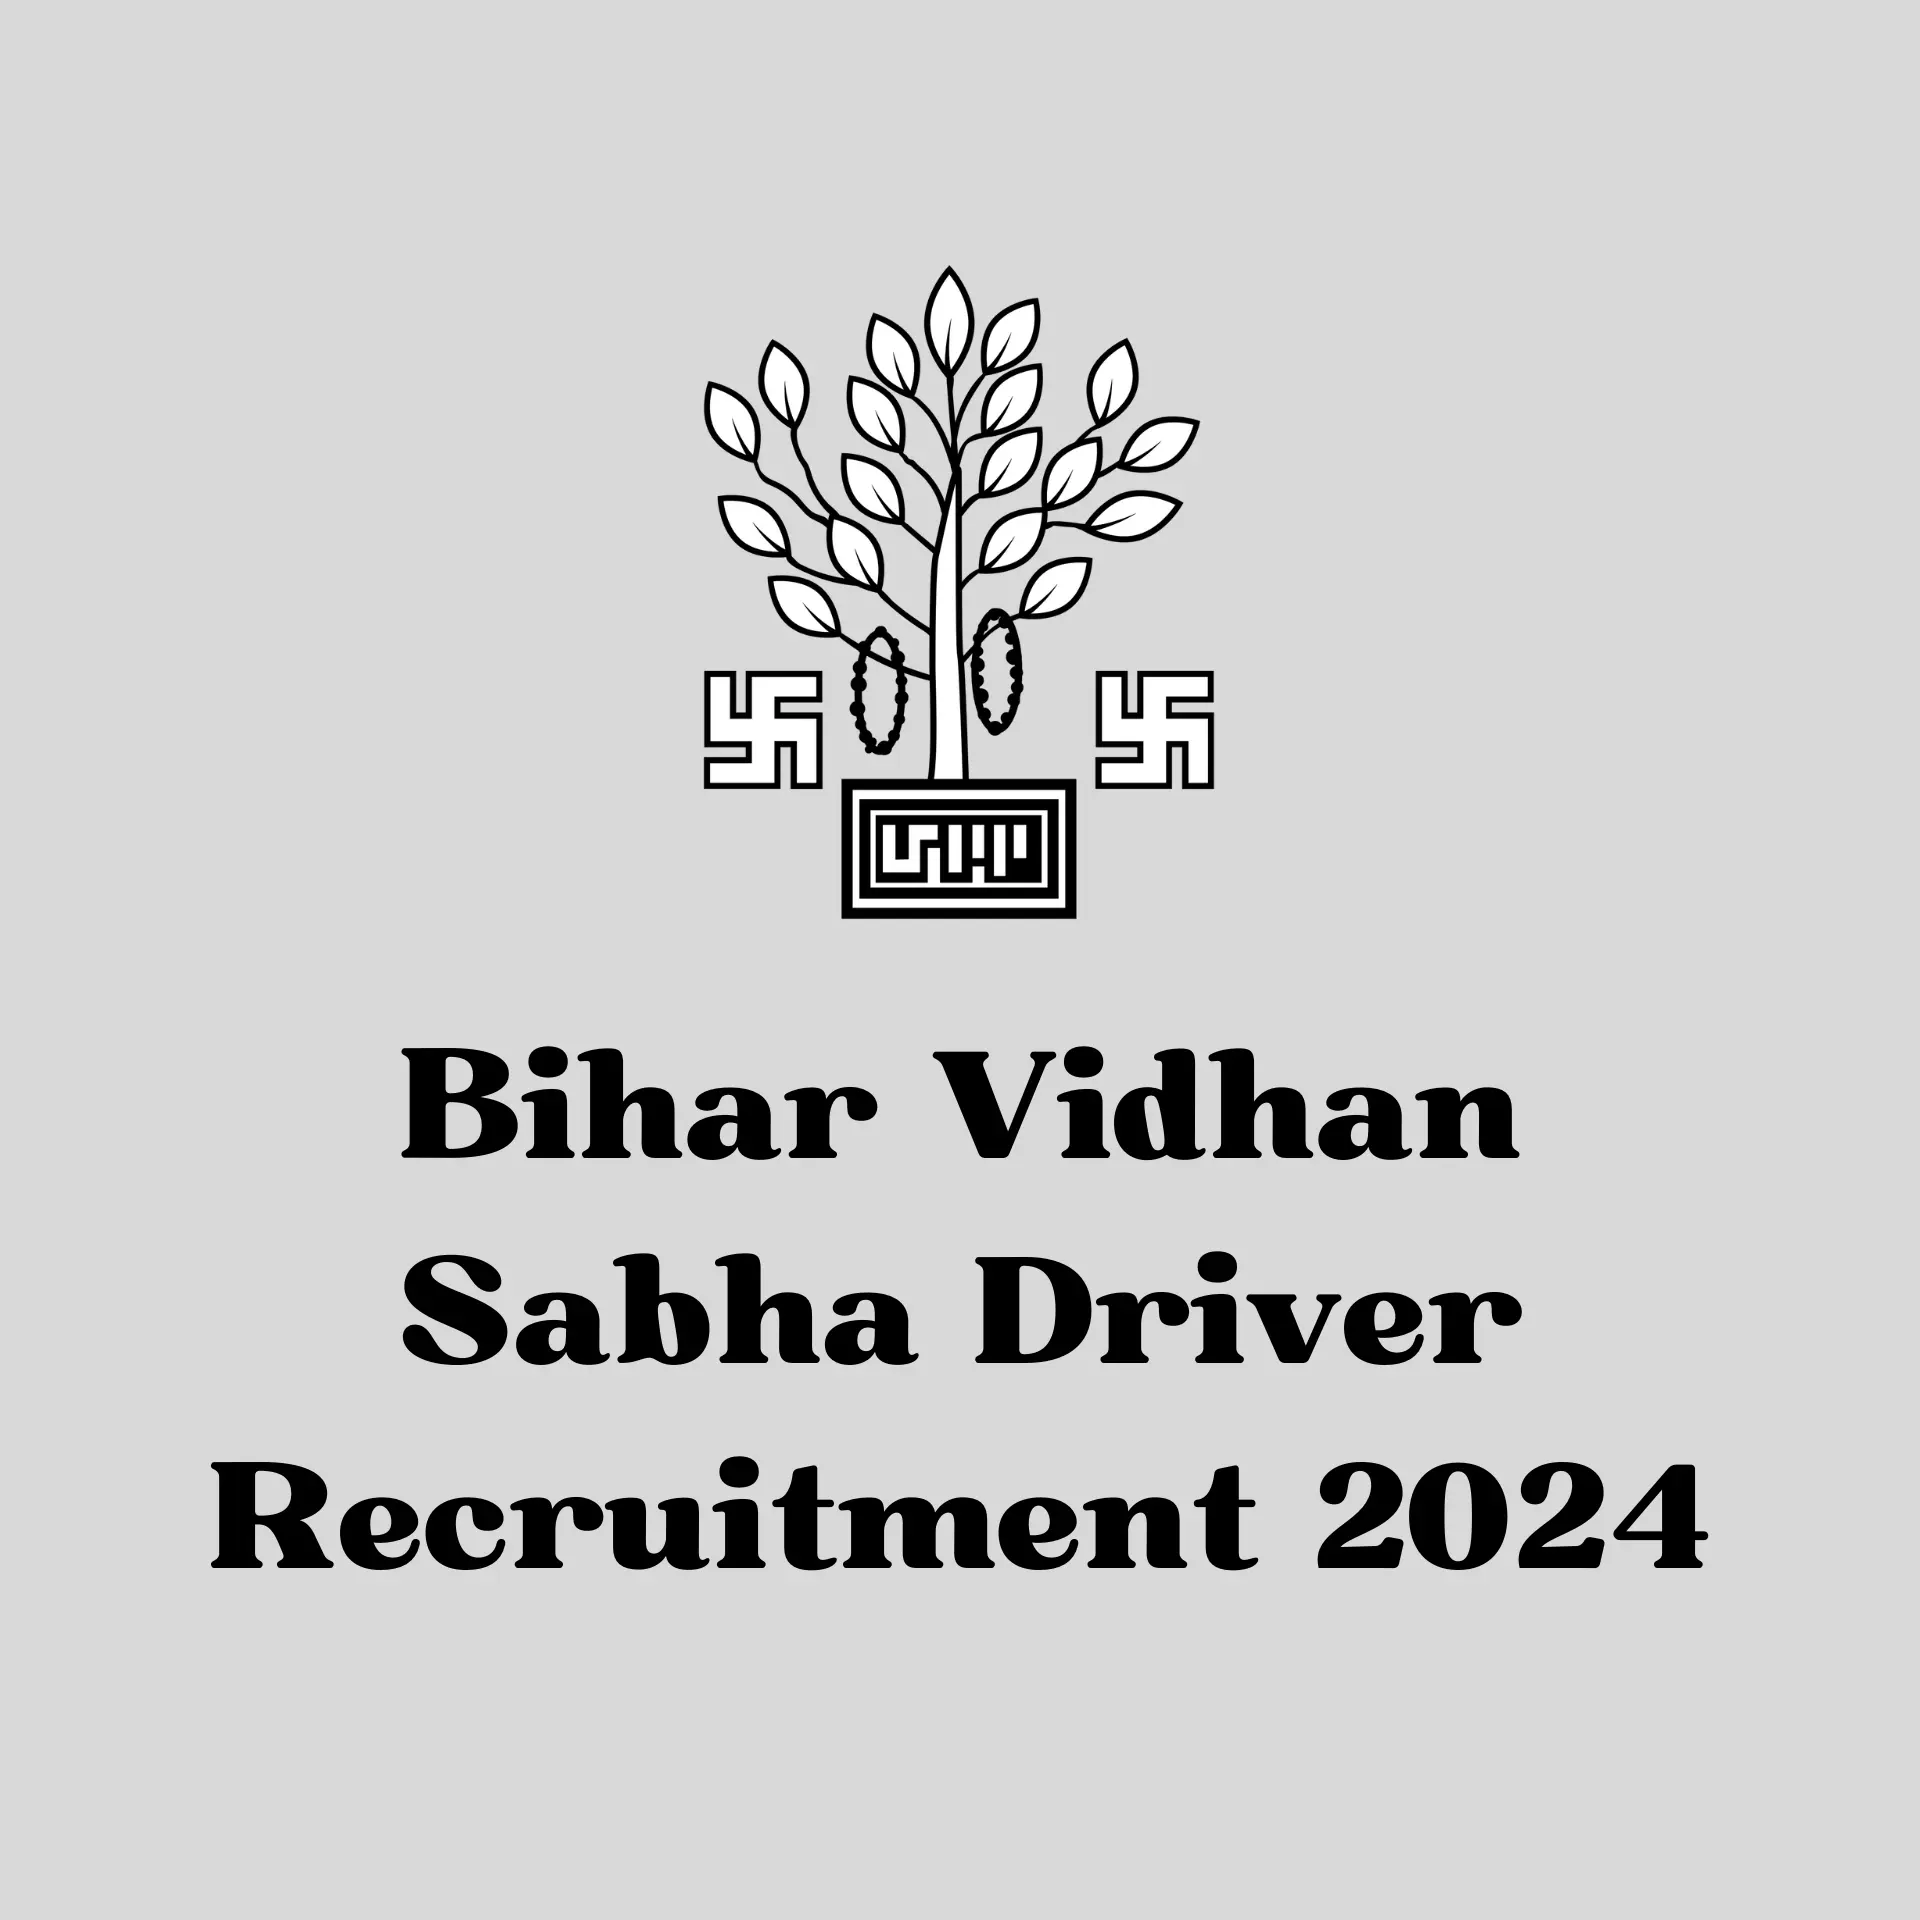 Bihar Vidhan Sabha Driver Recruitment 2024